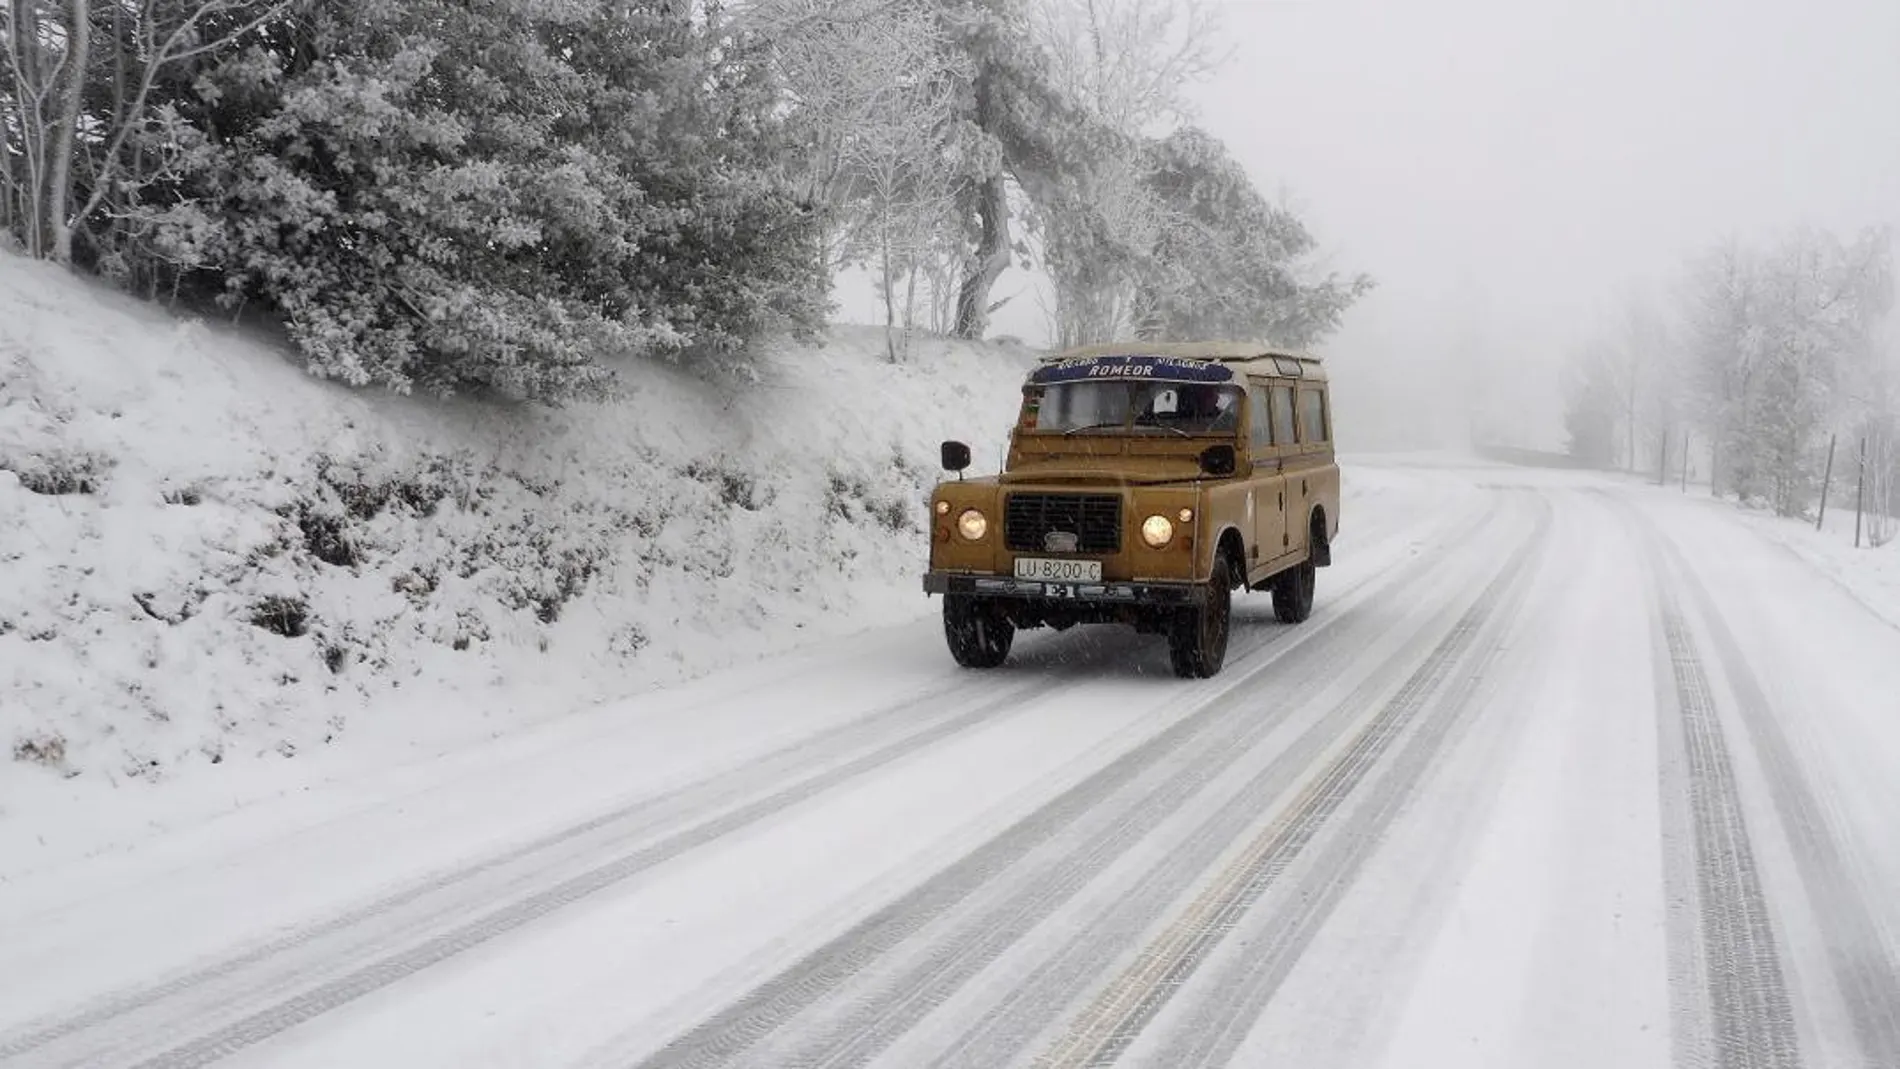 27 provincias de doce comunidades autónomas están en alerta por intensas nevadas